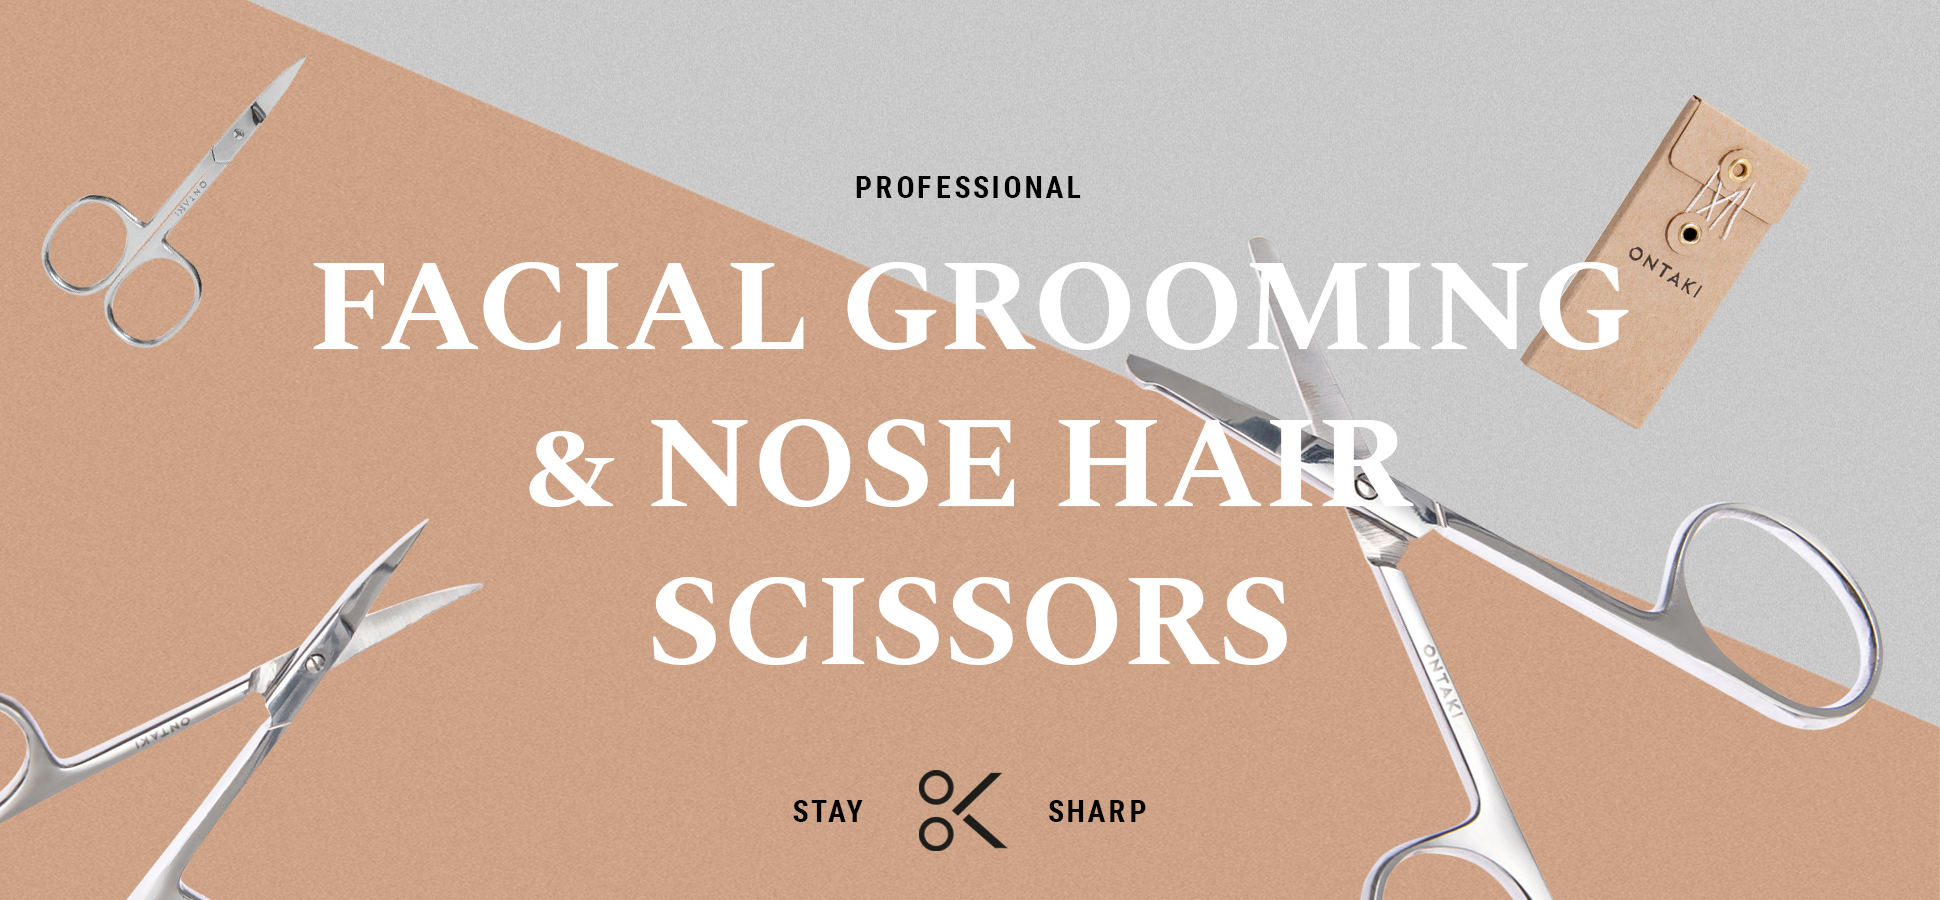 Nose Hair Scissors Facial Hair Small Grooming Scissors ,9.4x4.7cm Small Scissors Beauty Nose Hair Trimmer for Ear Hair Beard Eyebrow Trimming Black